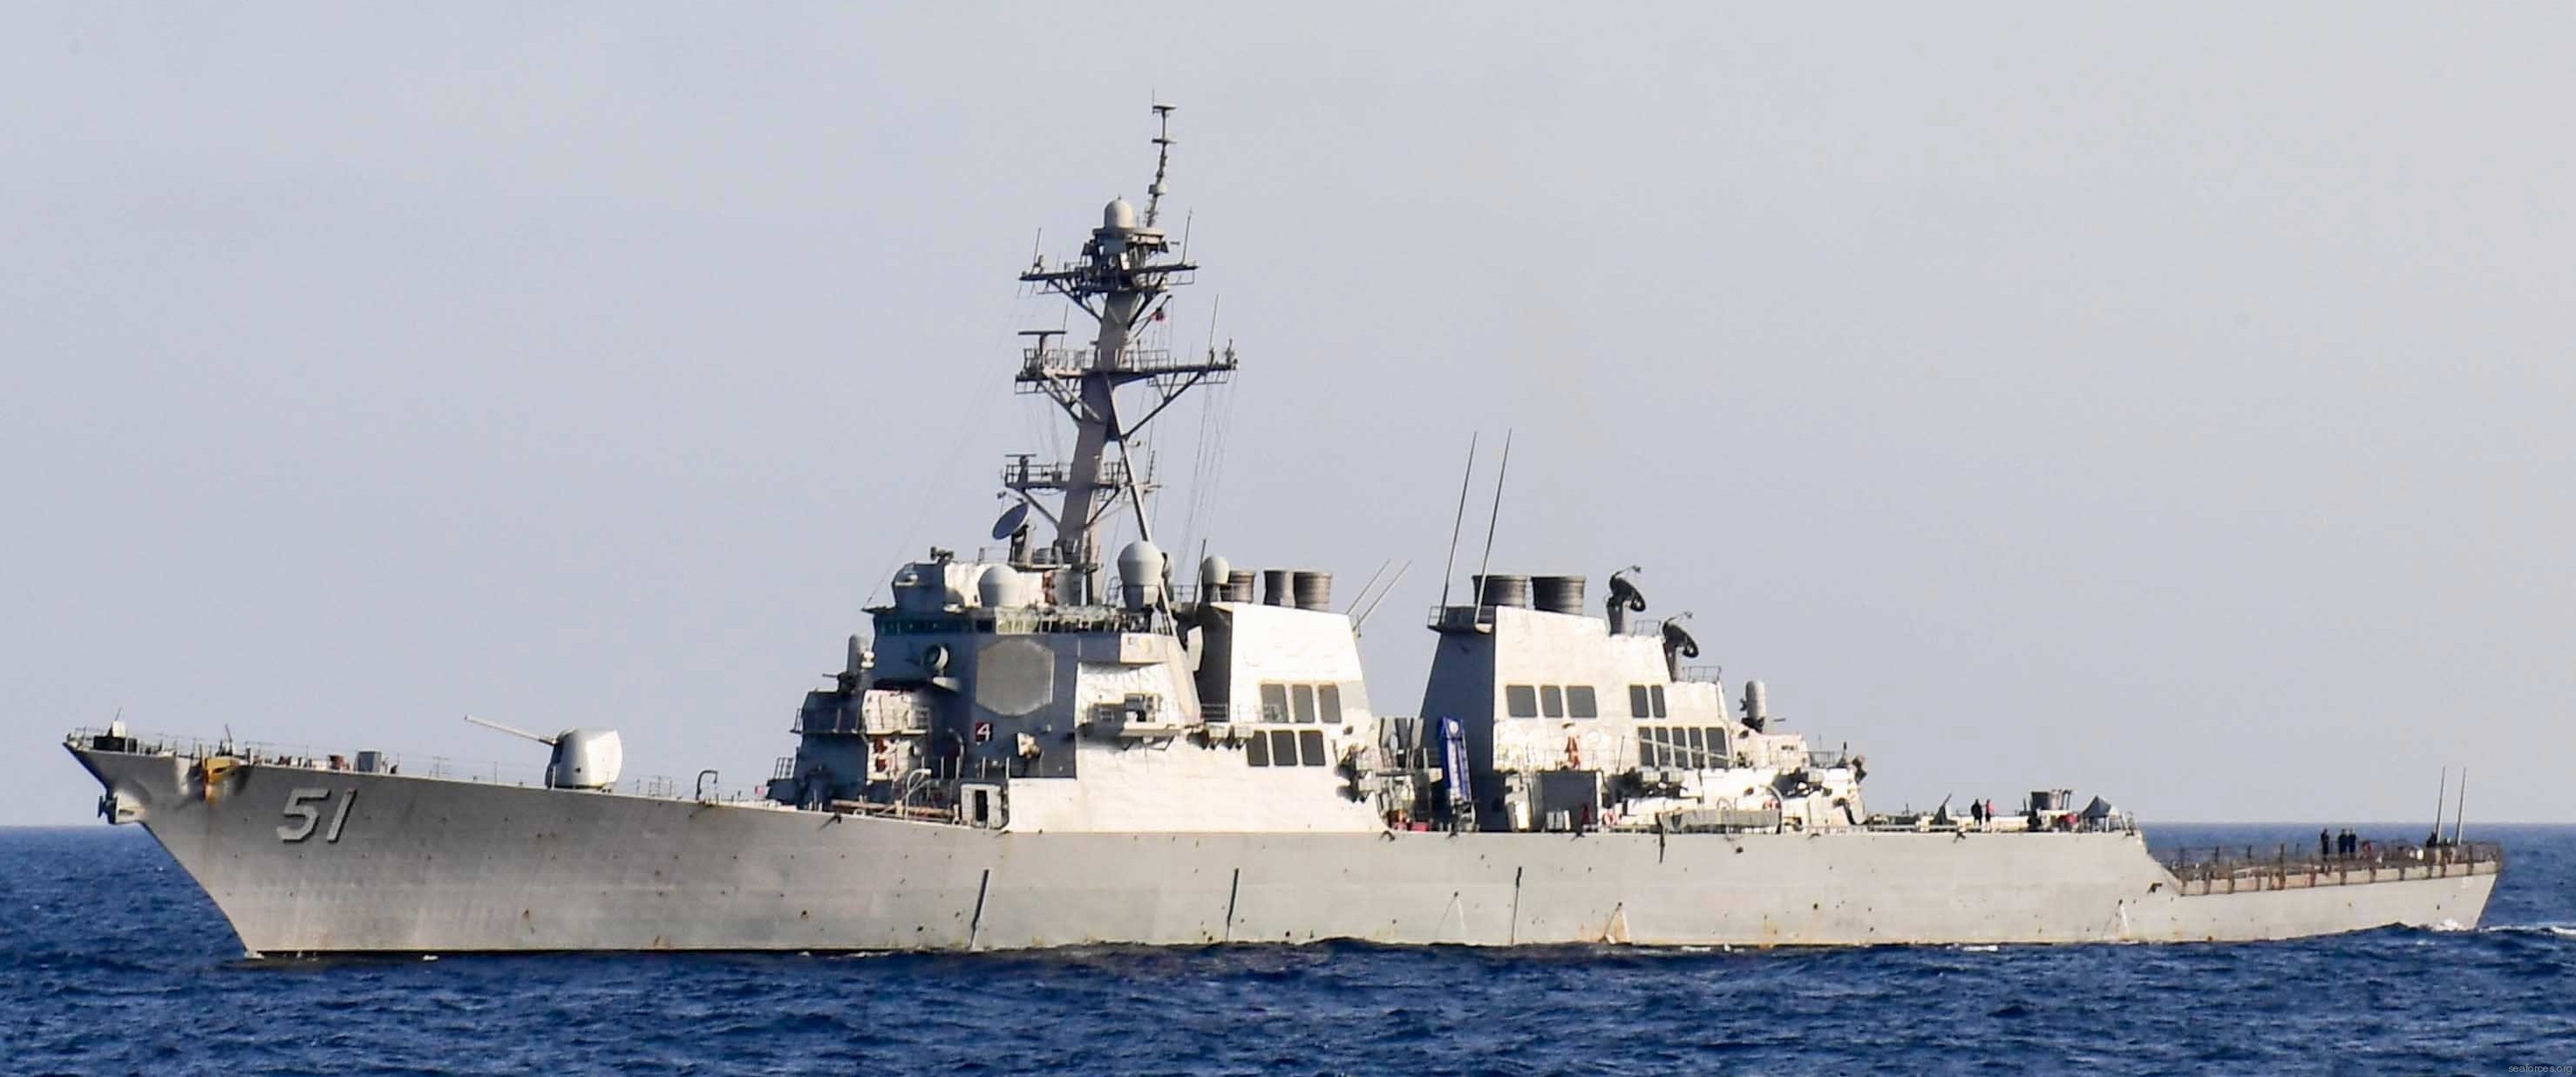 ddg-51 uss arleigh burke guided missile destroyer us navy 94 mediterranean sea